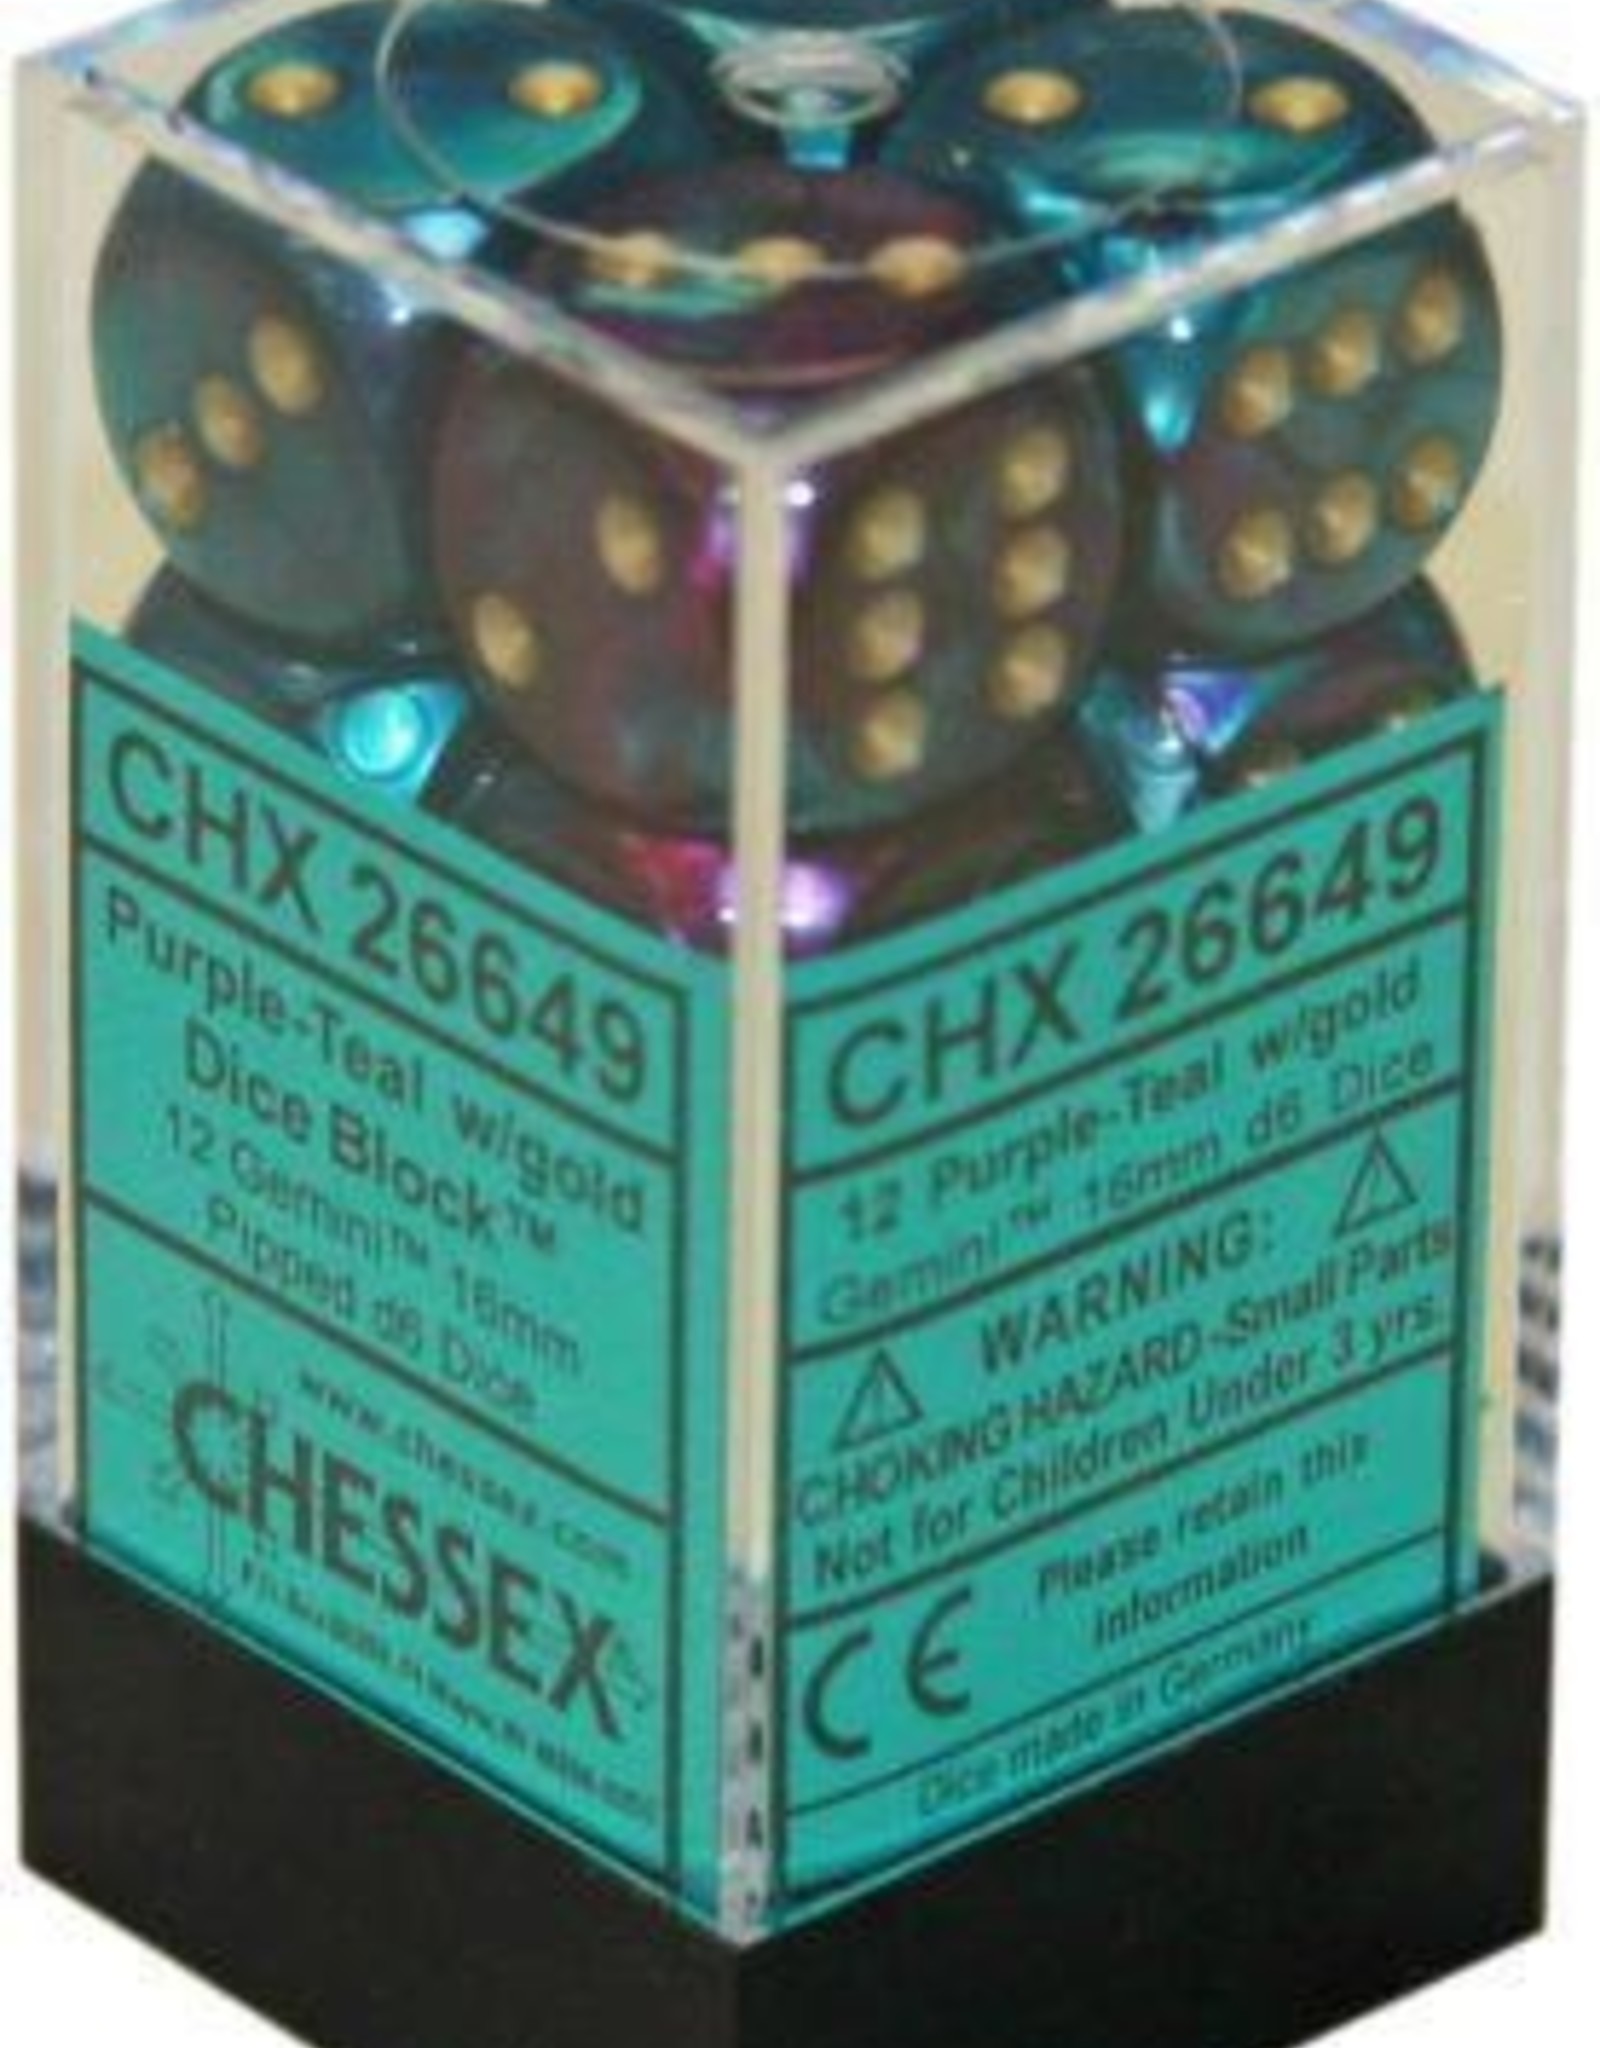 Chessex 16MM D6 Dice Set CHX26649 Gemini Purple-Teal/Gold